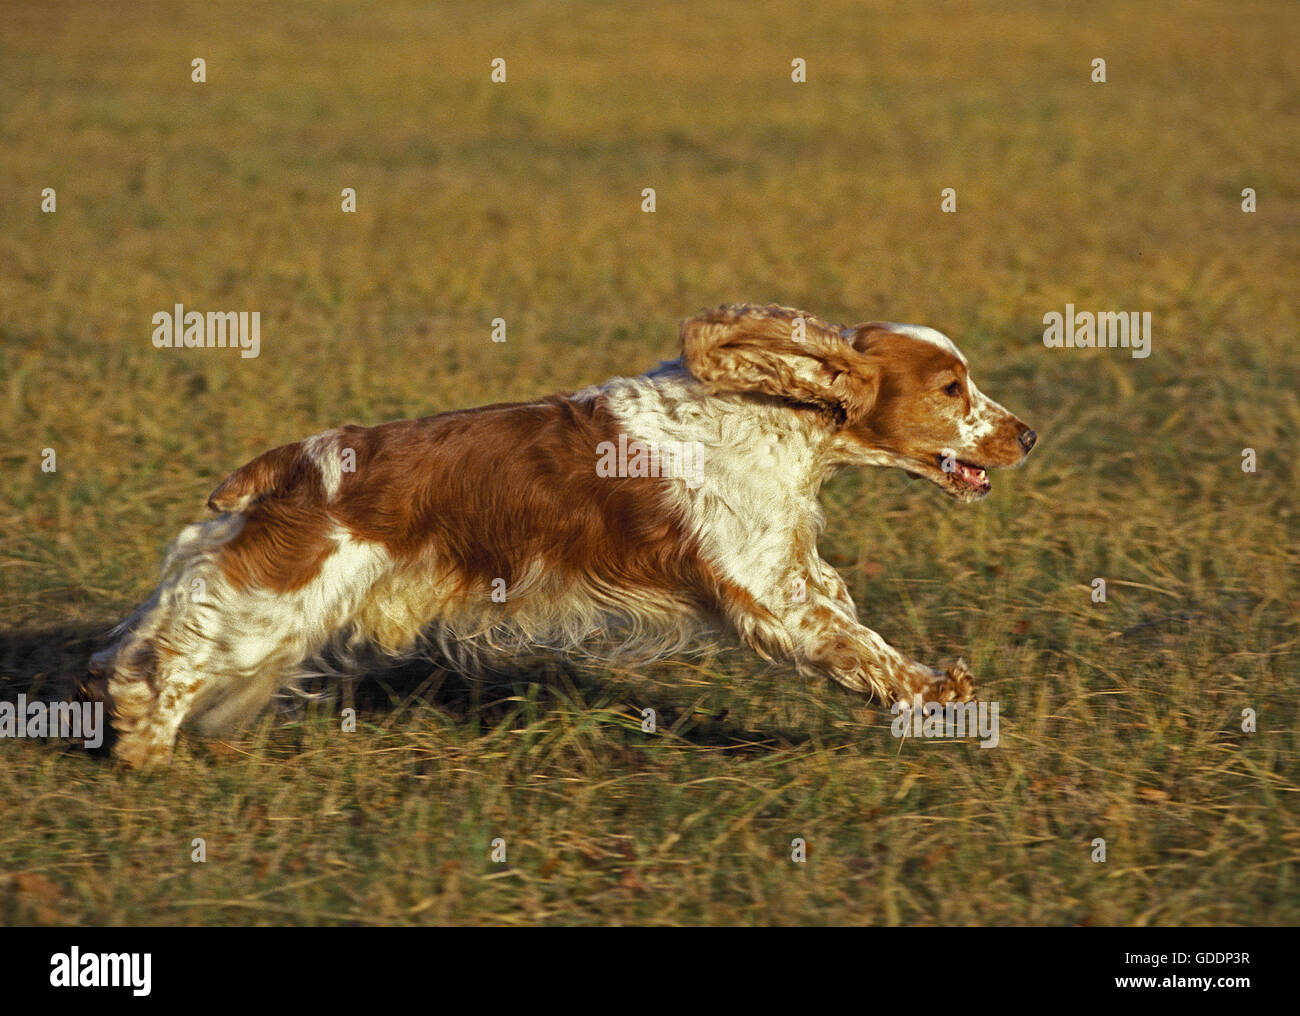 English Cocker Spaniel, Dog running through Field Stock Photo